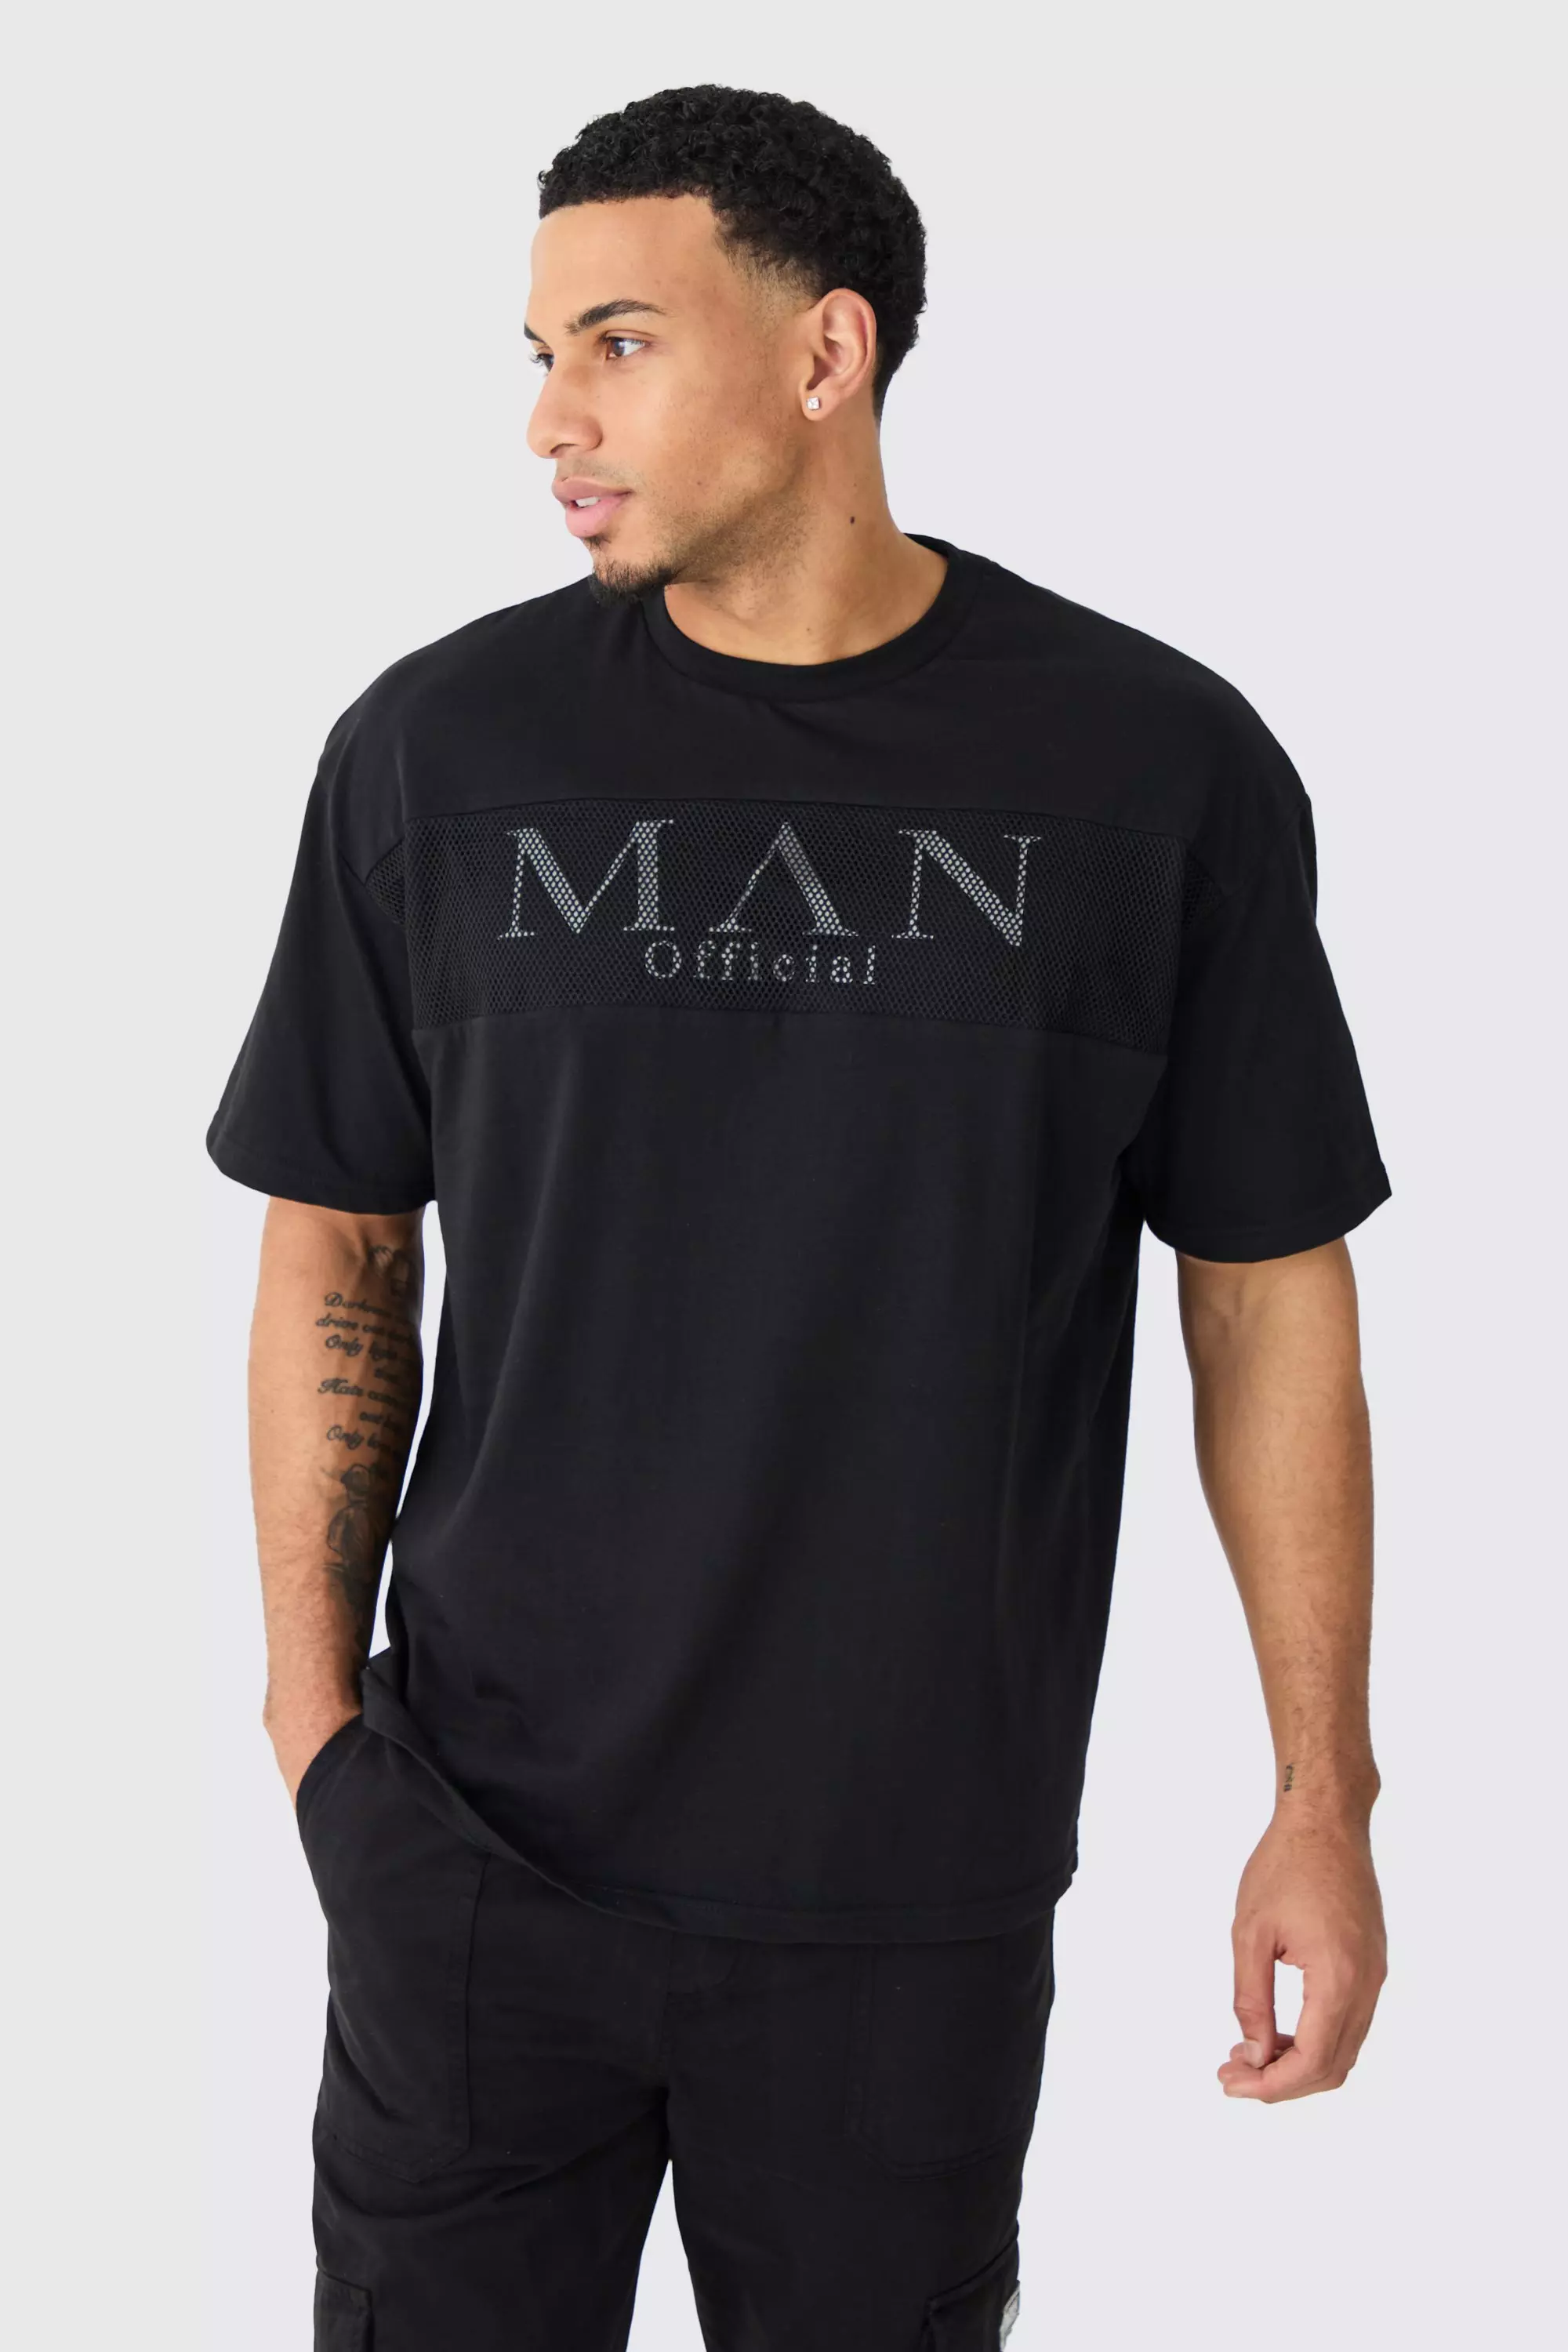 Oversized Man Official Mesh Layer T-shirt Black